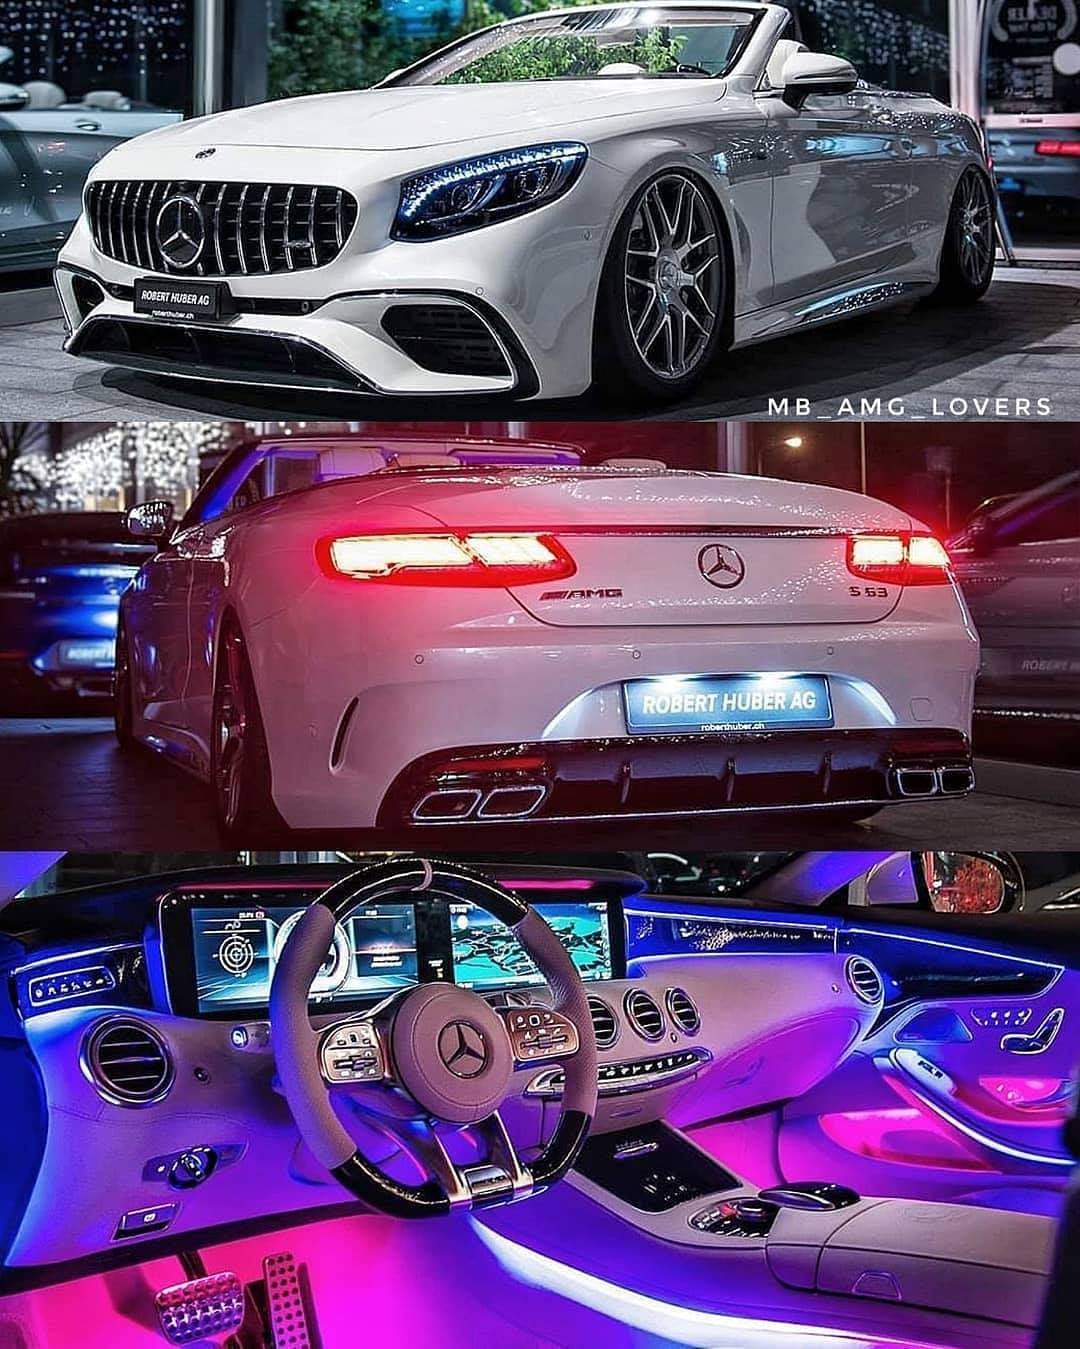 AMG S63 #MercedesBenz #AMG #S63 #Convertible #Sport #Racing #Tuning #Speed #Luxury